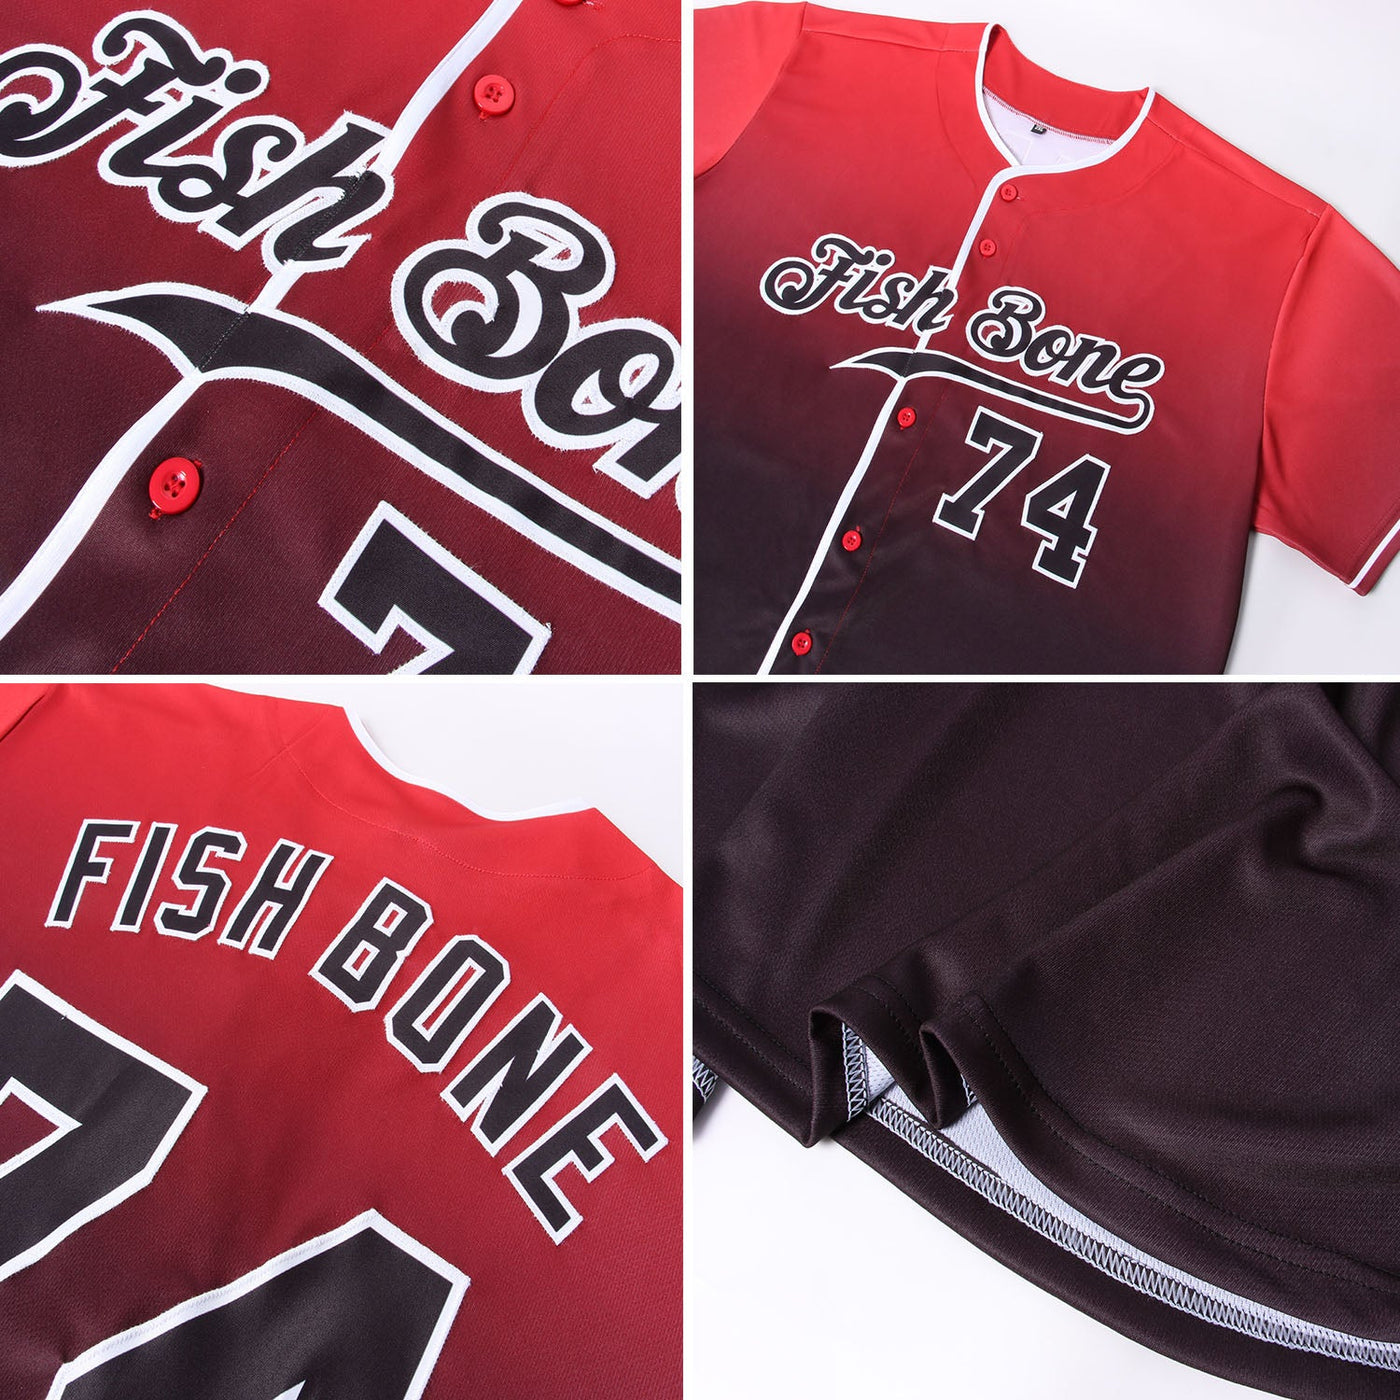 Custom Red Black-White Authentic Fade Fashion Baseball Jersey - Owls Matrix LTD